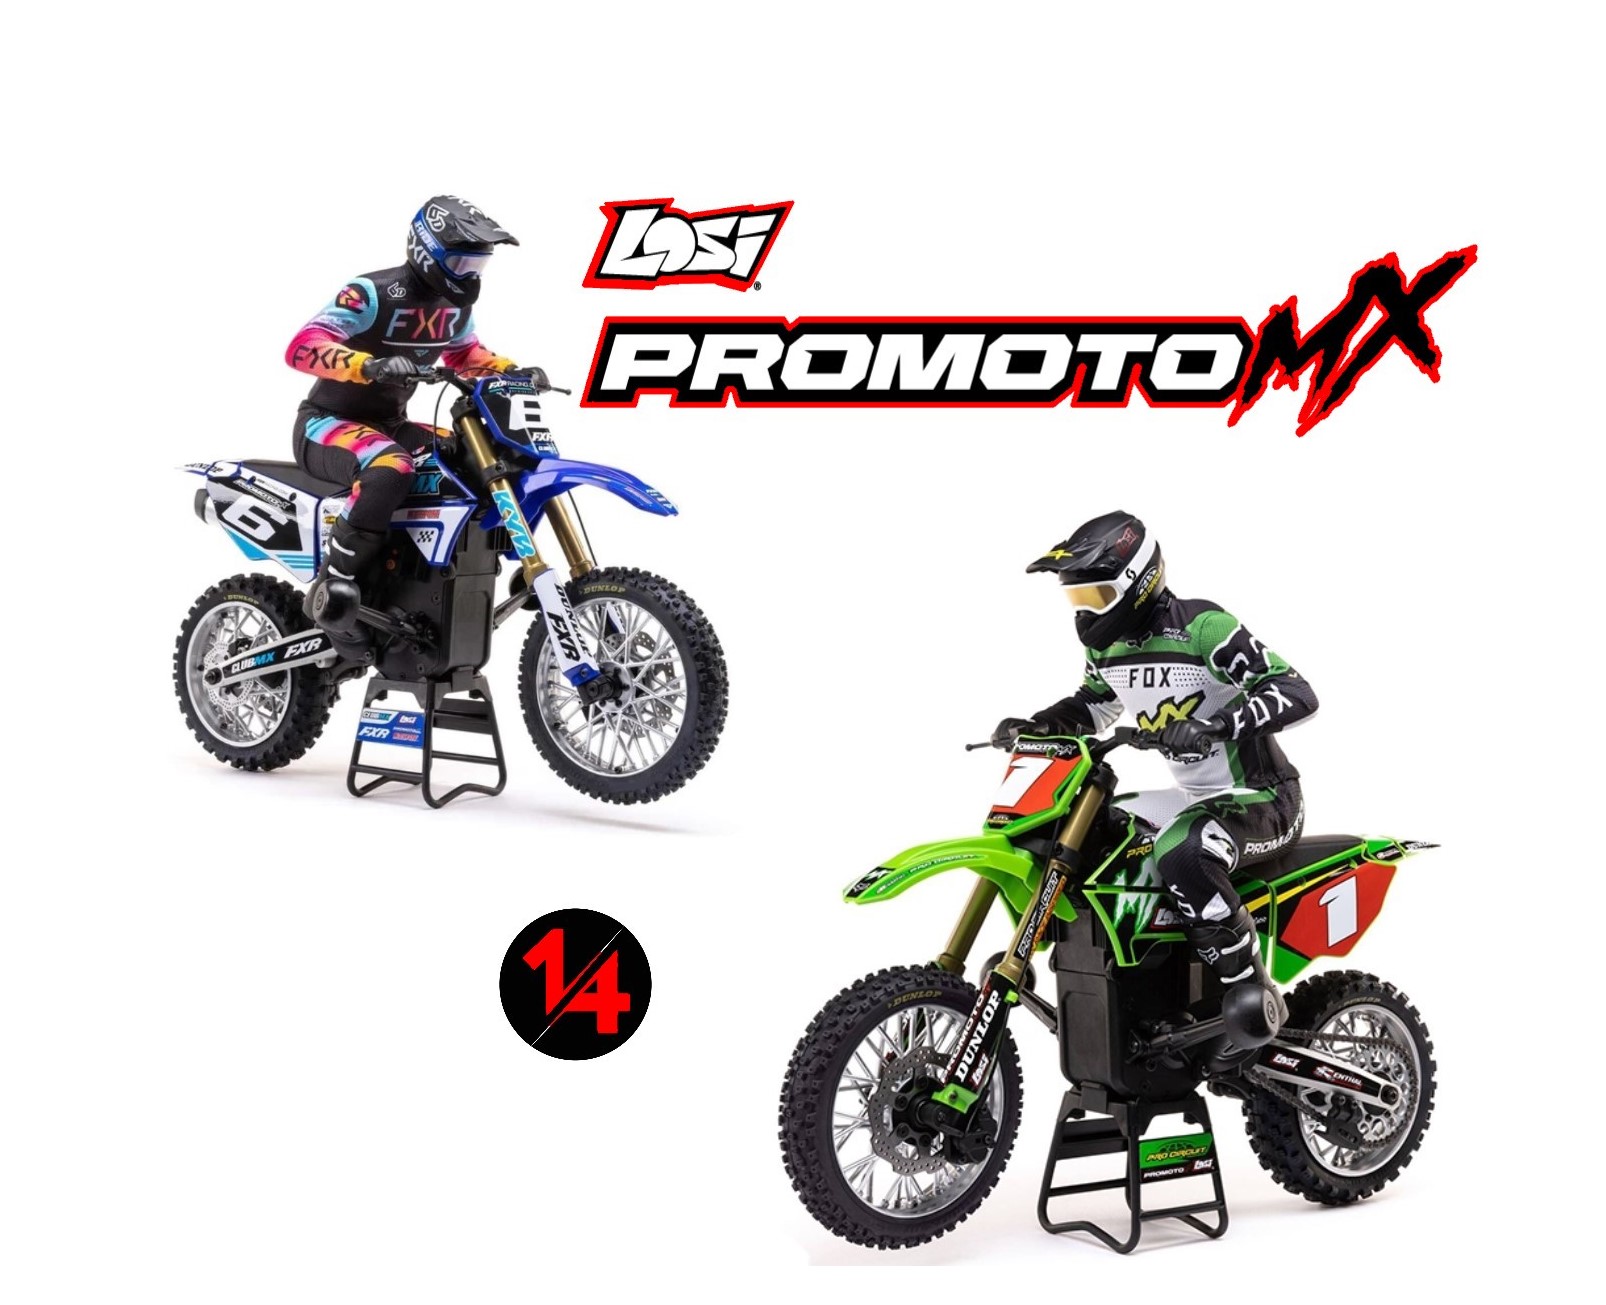 LOSI PRO MOTO-MX FXR MOTORCYCLE 1/4